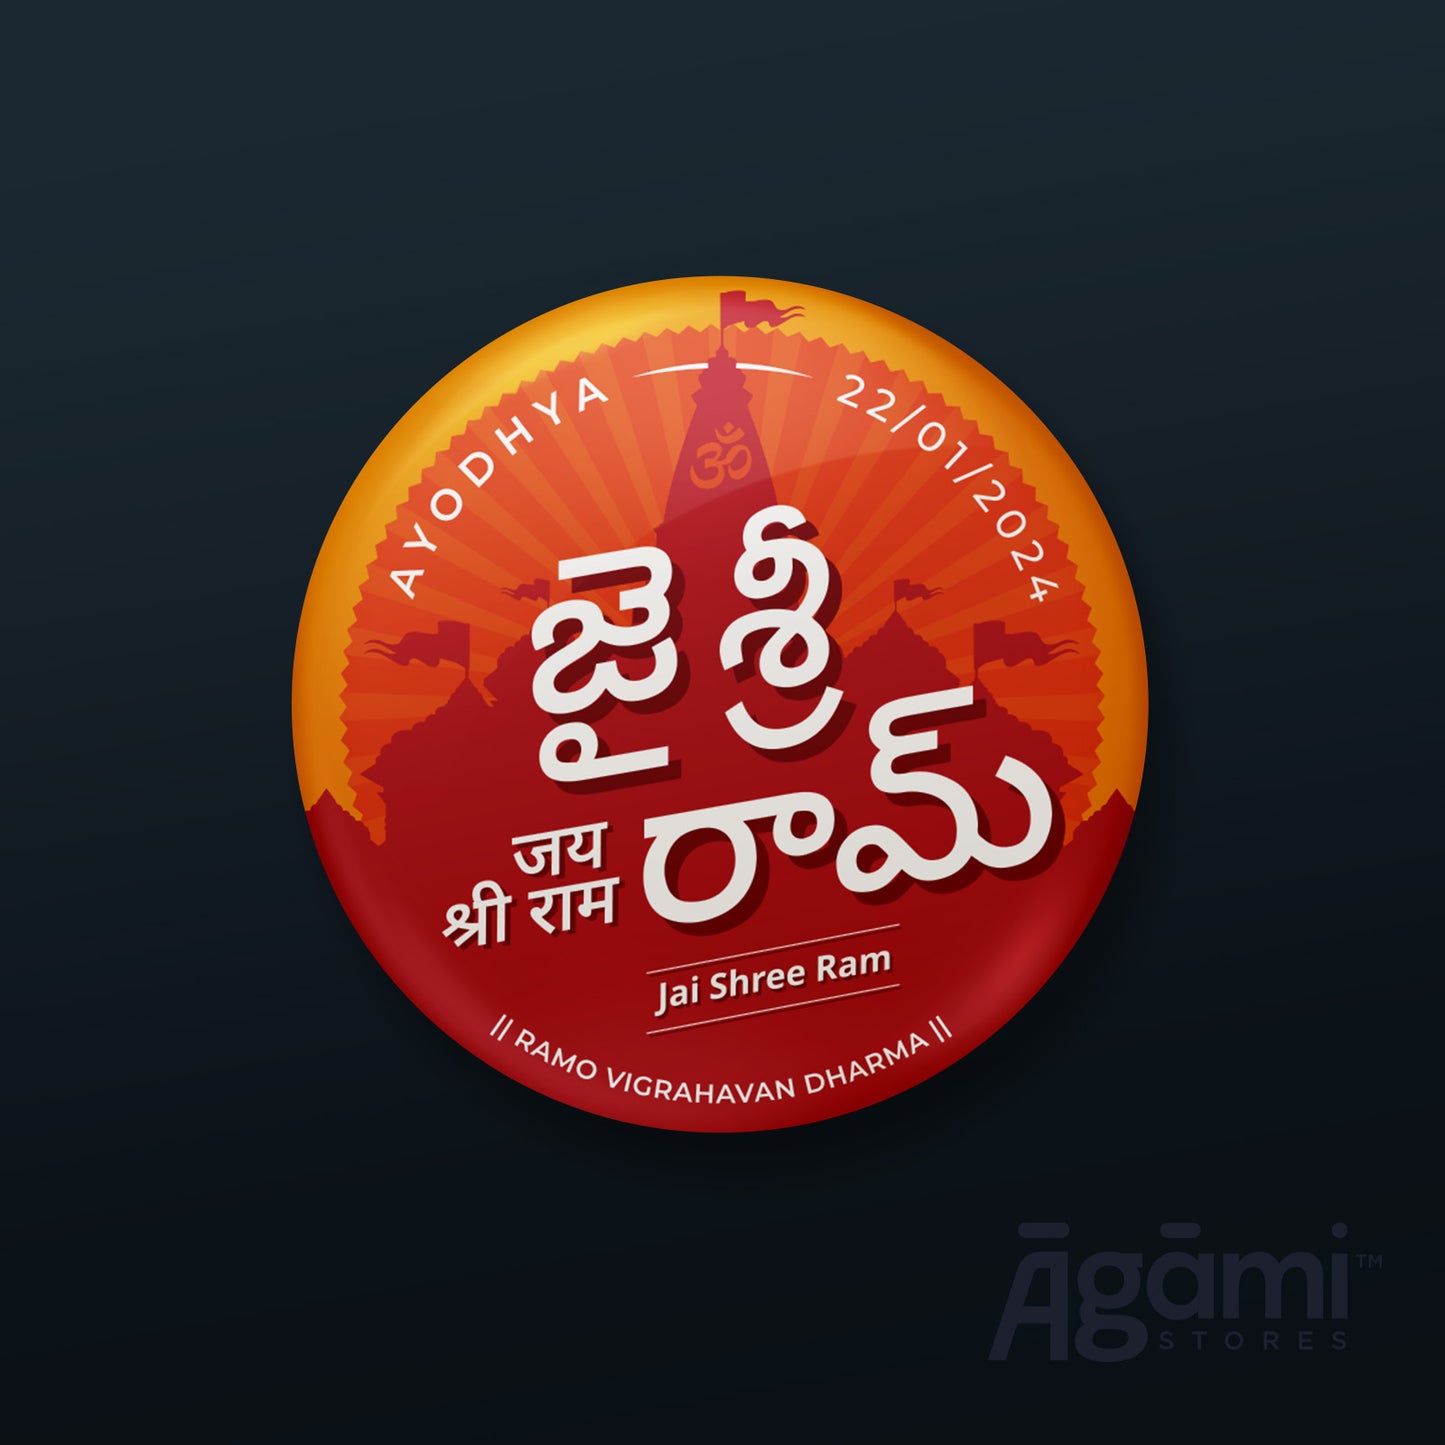 Ayodhya Telugu Pin Badge + Magnet